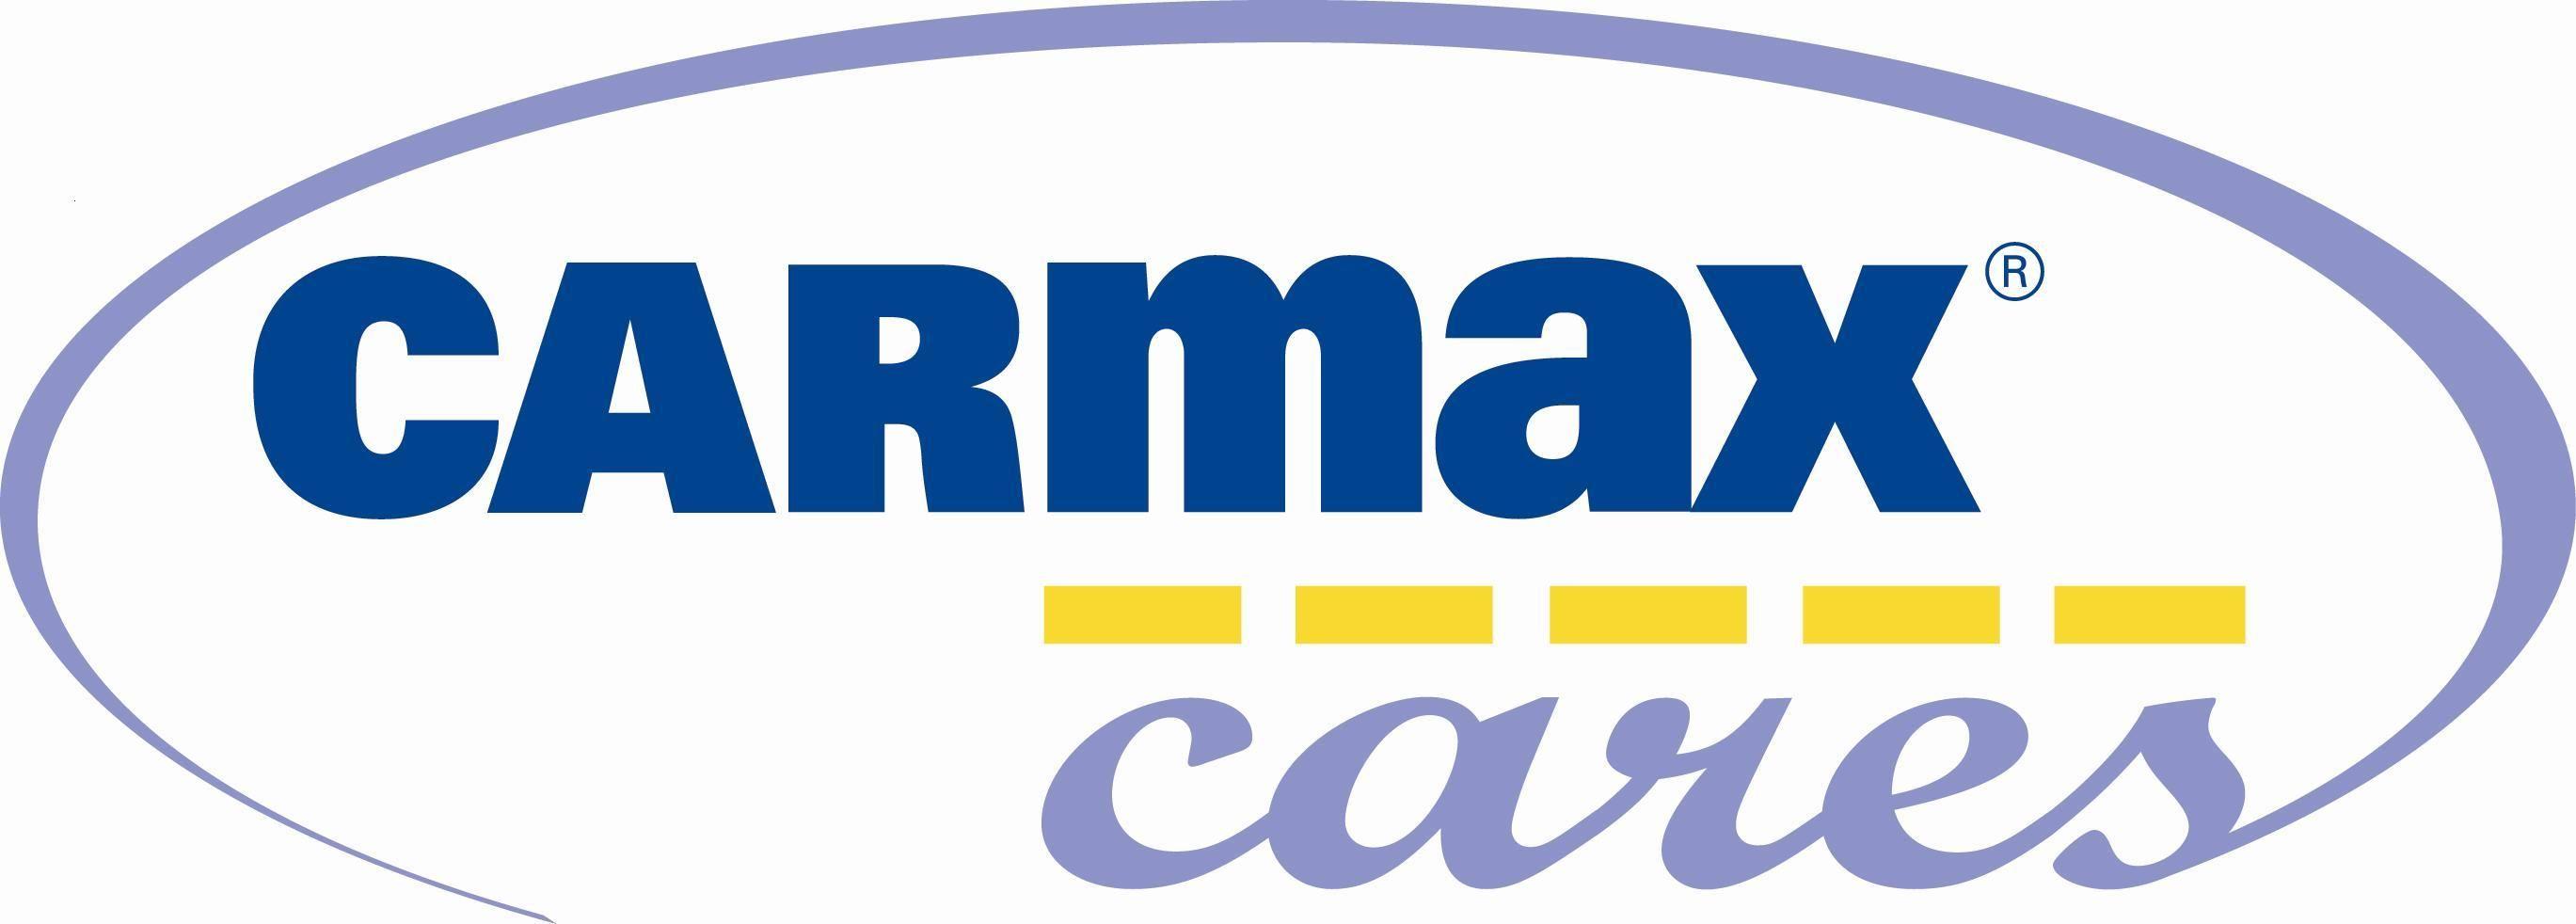 CarMax Logo - Carmax logo resized - Collier Child Care Resources